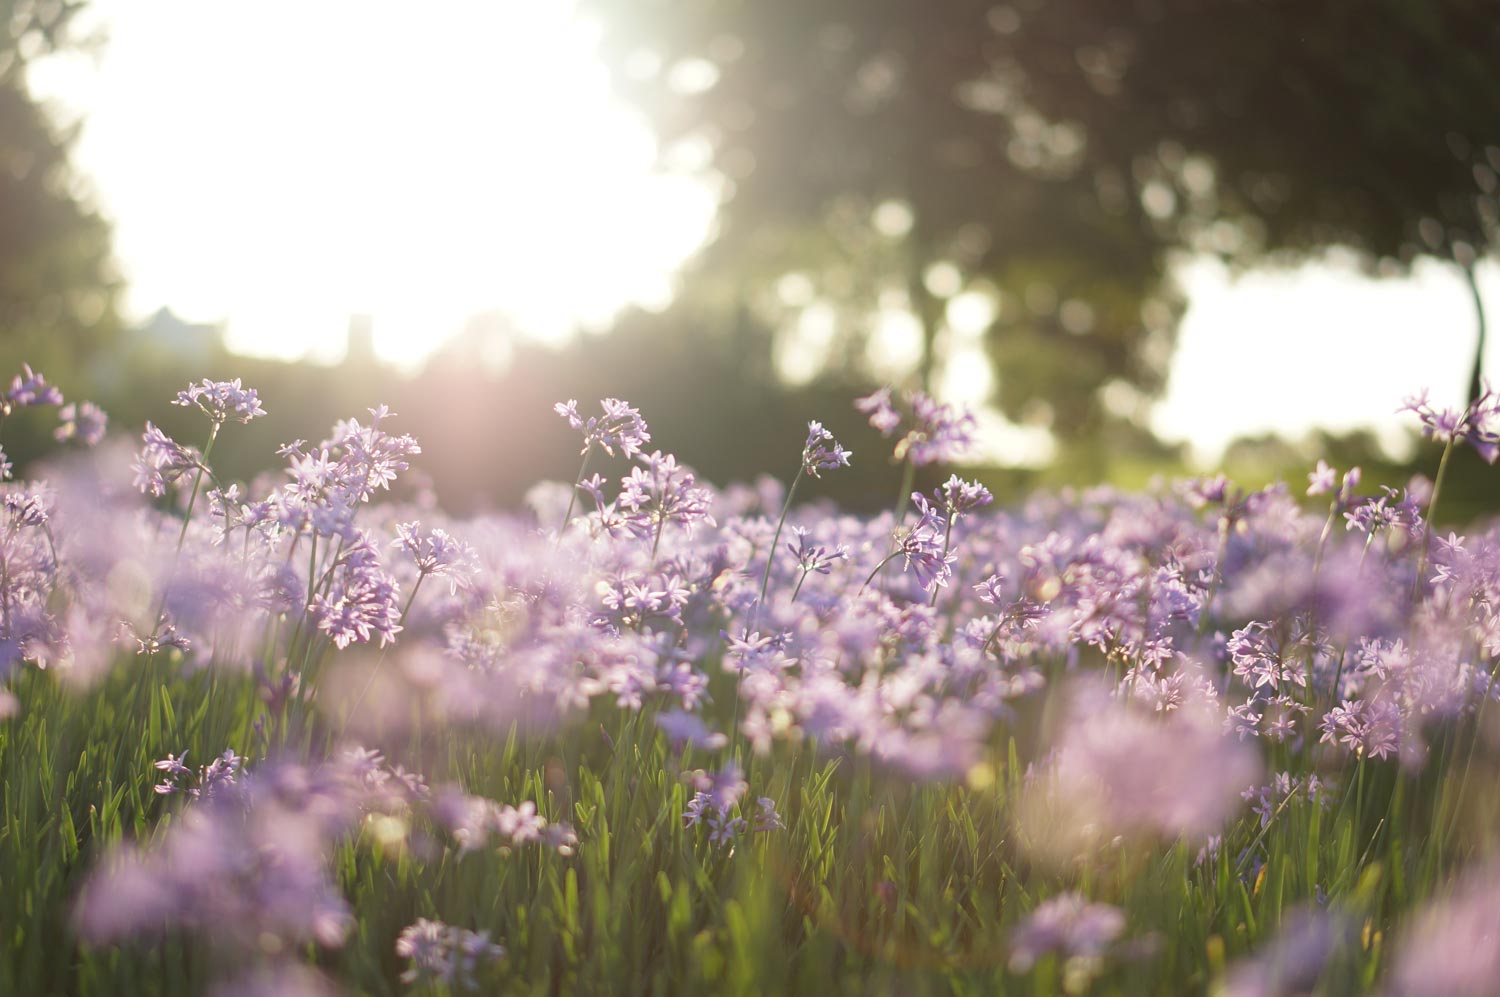 Purple wild flowers and grass